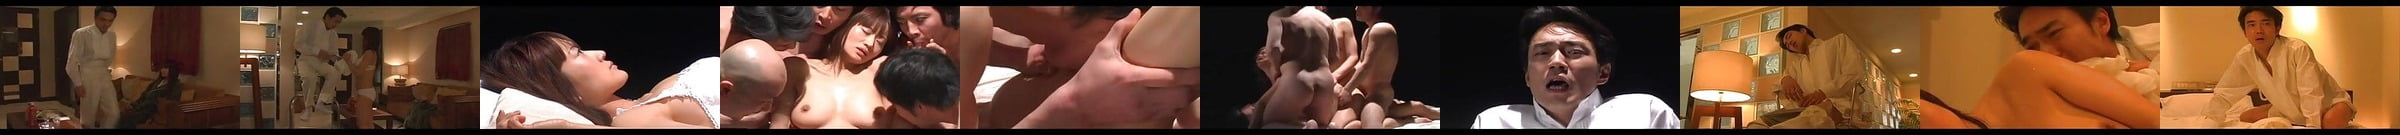 Erotic Threesome Porn Videos Xhamster